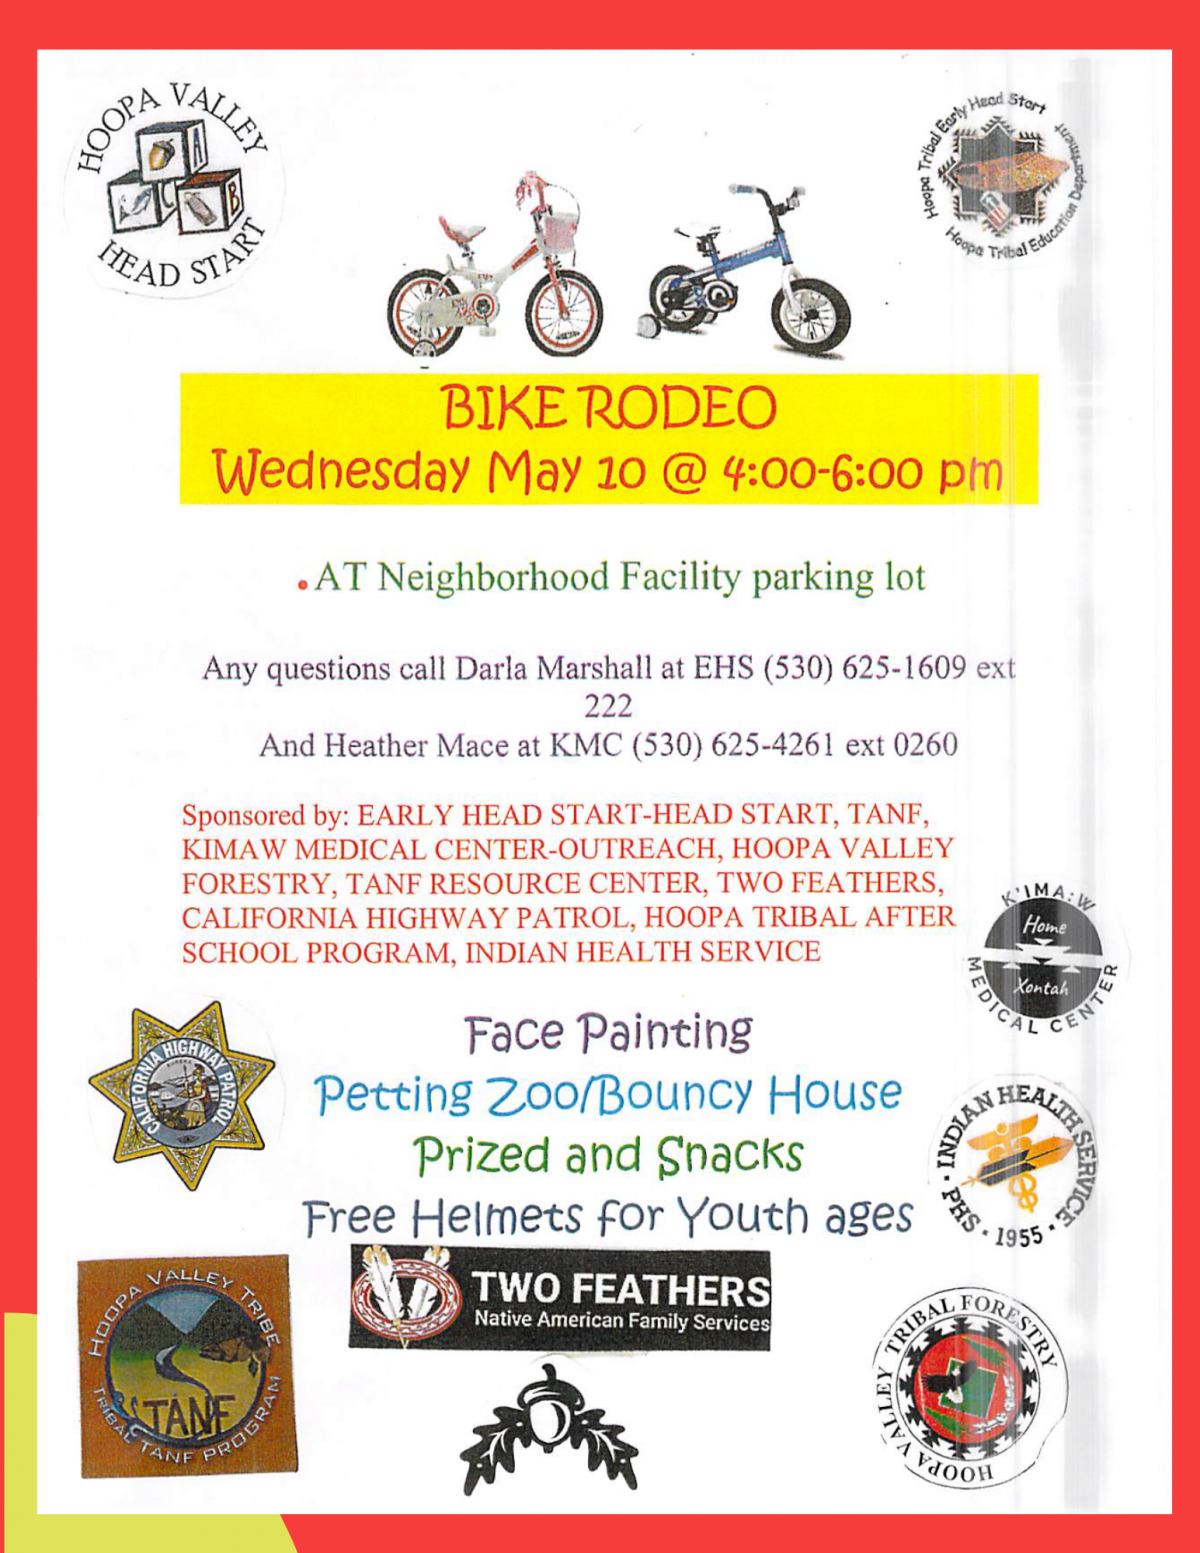 Updated Bike Rodeo Notice